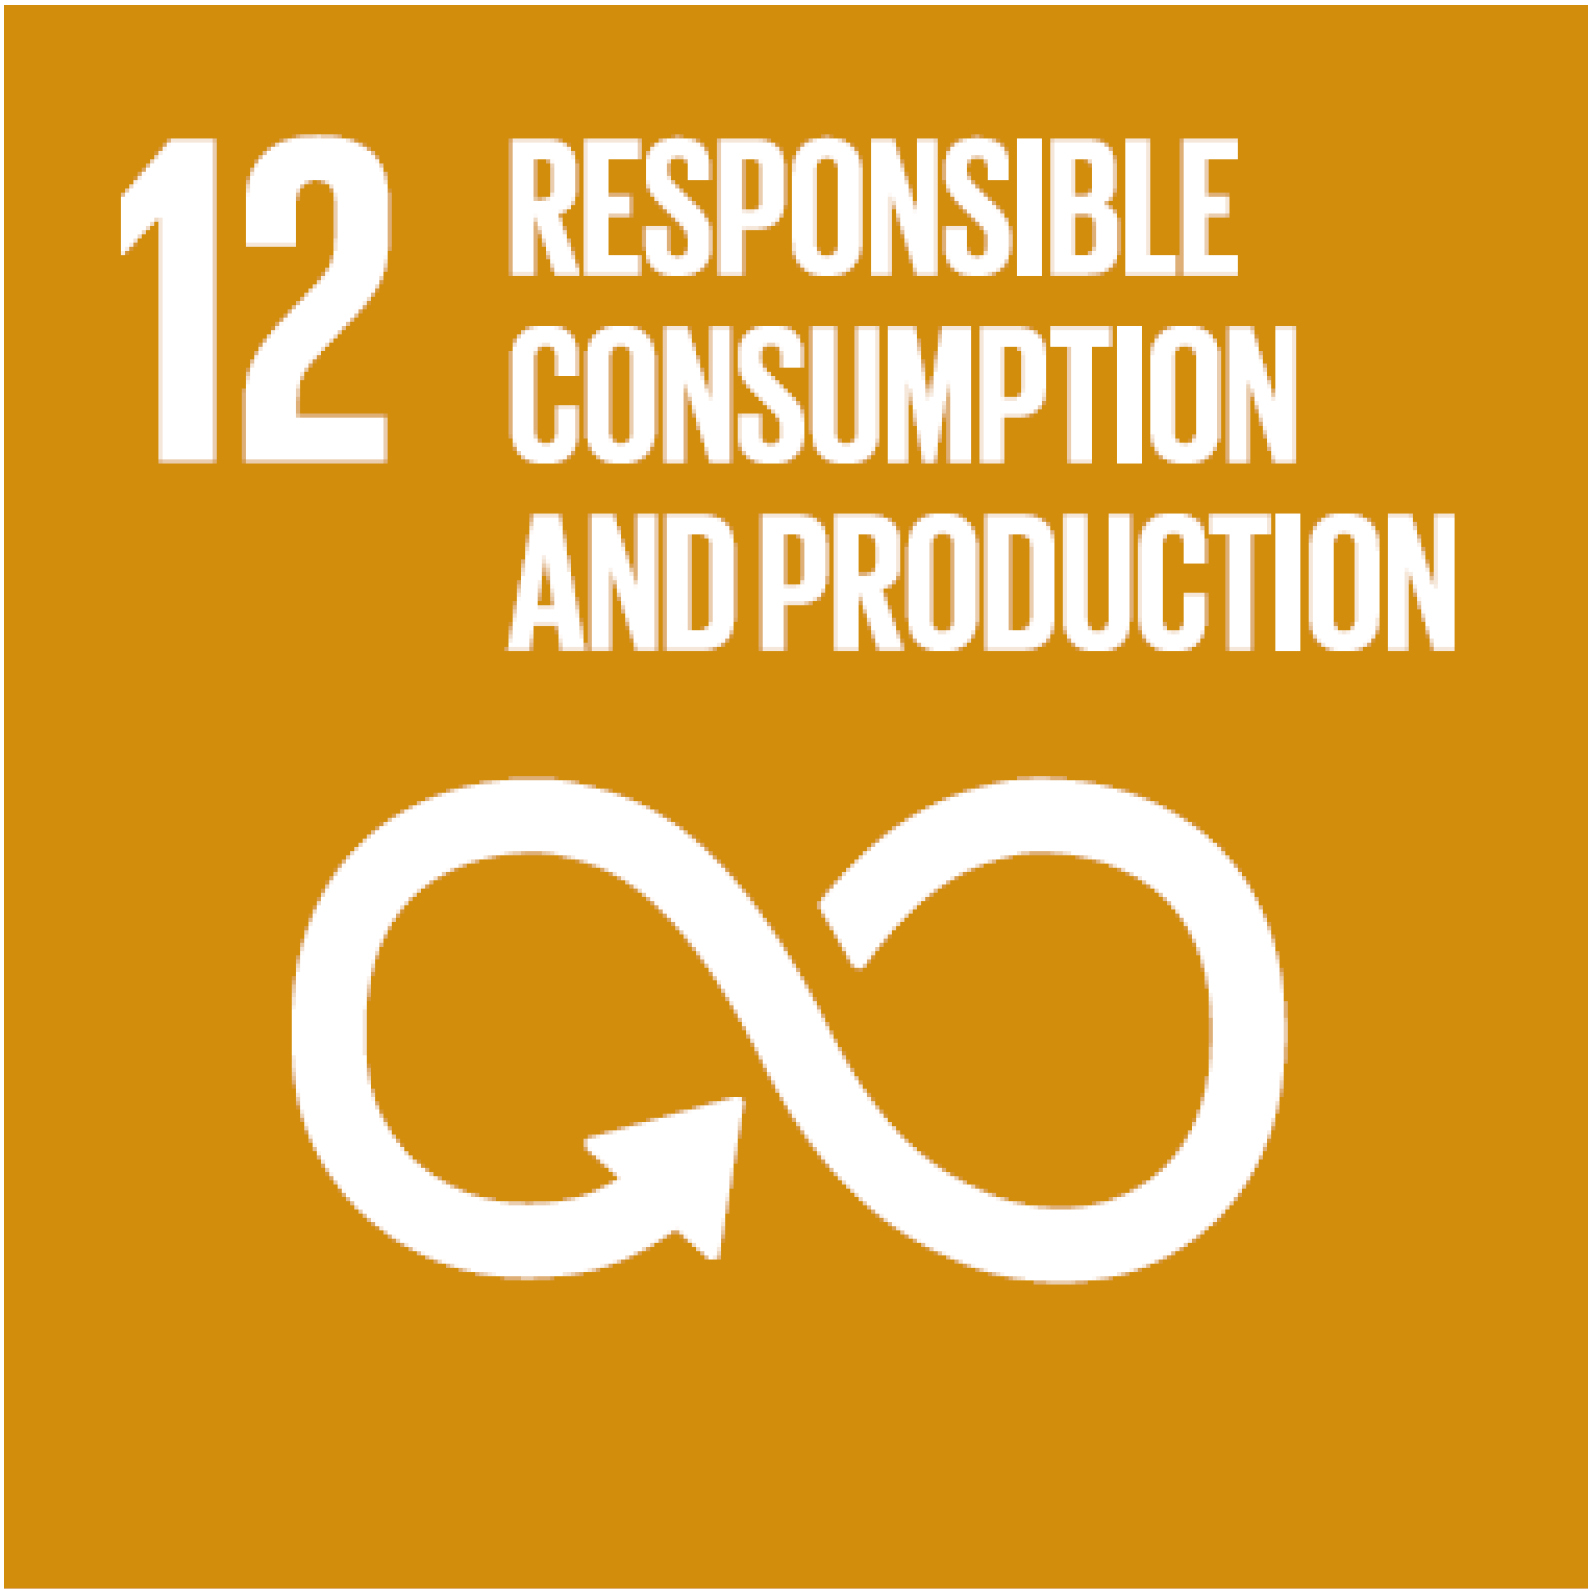 JS Proputec works with UN SDG no. 12 - Responsible Consumption and Production